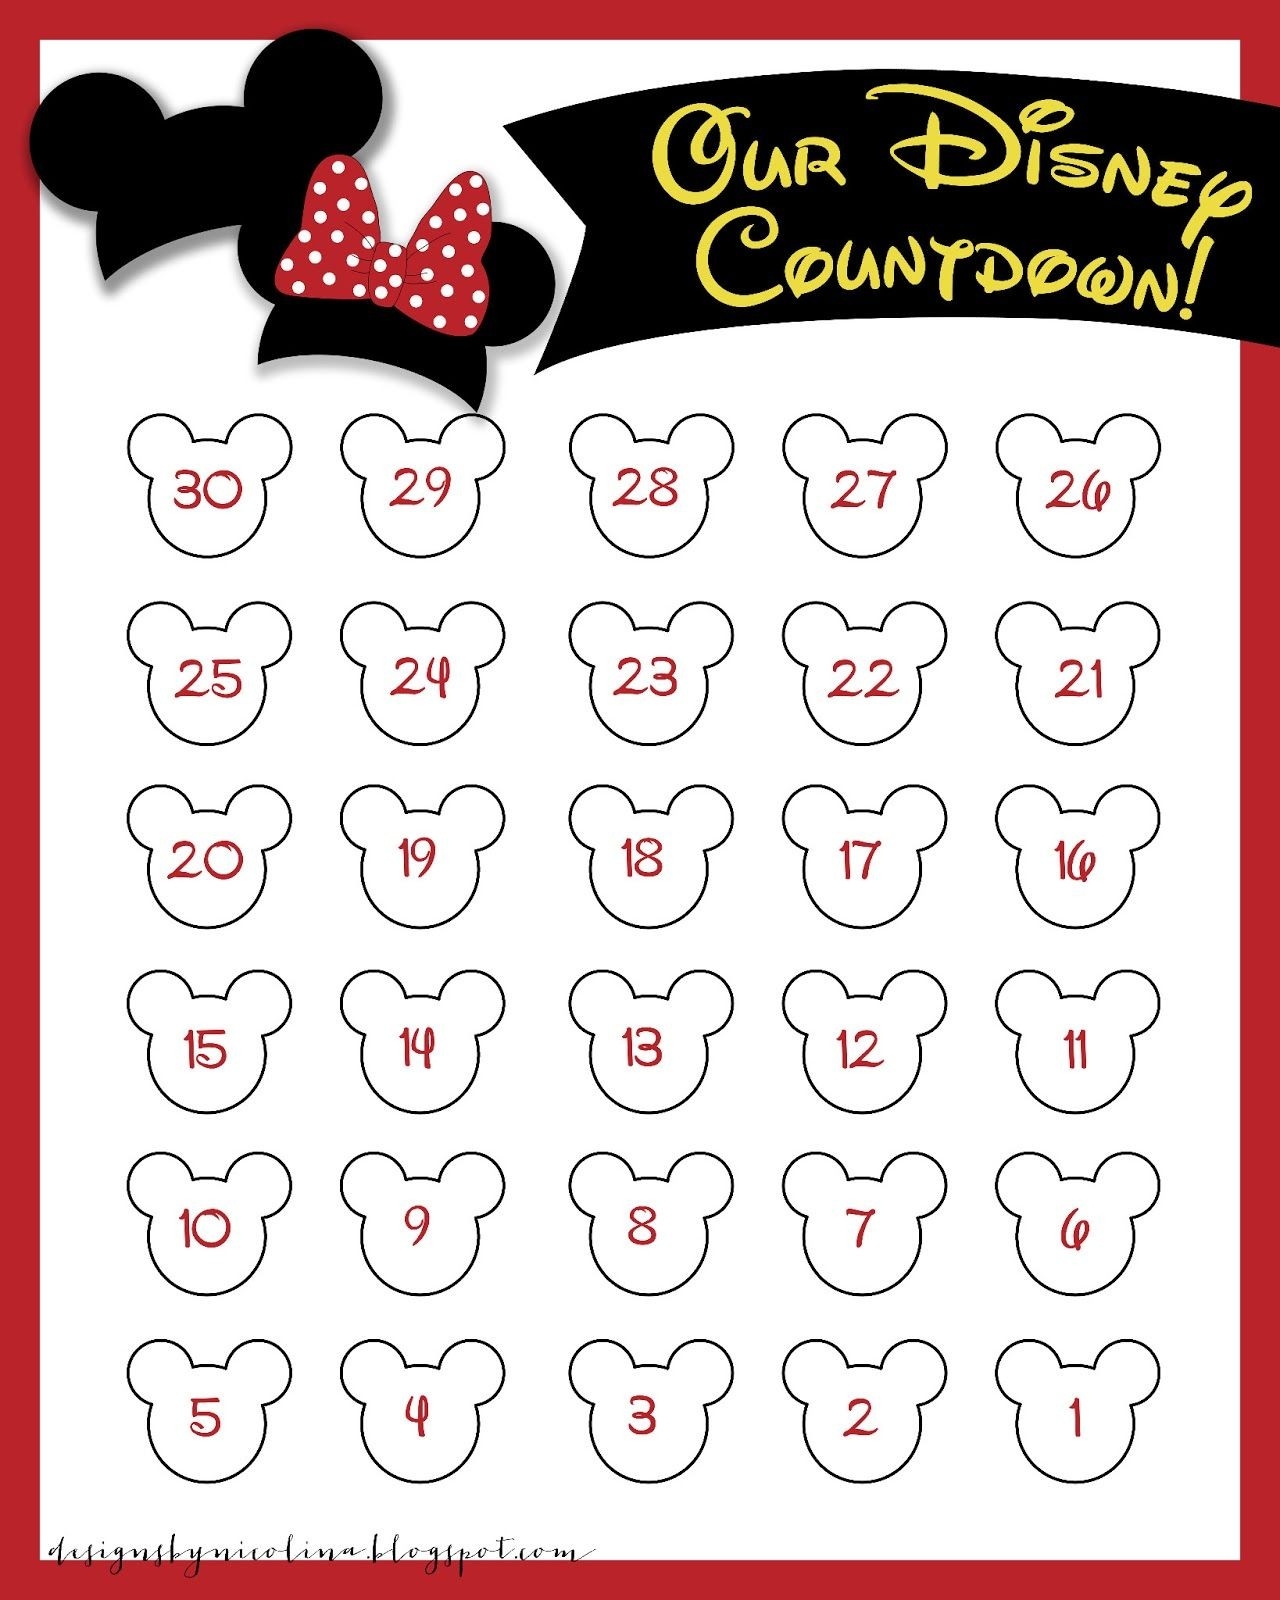 Disneyland Countdown Calendar | Designs By Nicolina: Disney-Disney Countdown Calendar Template